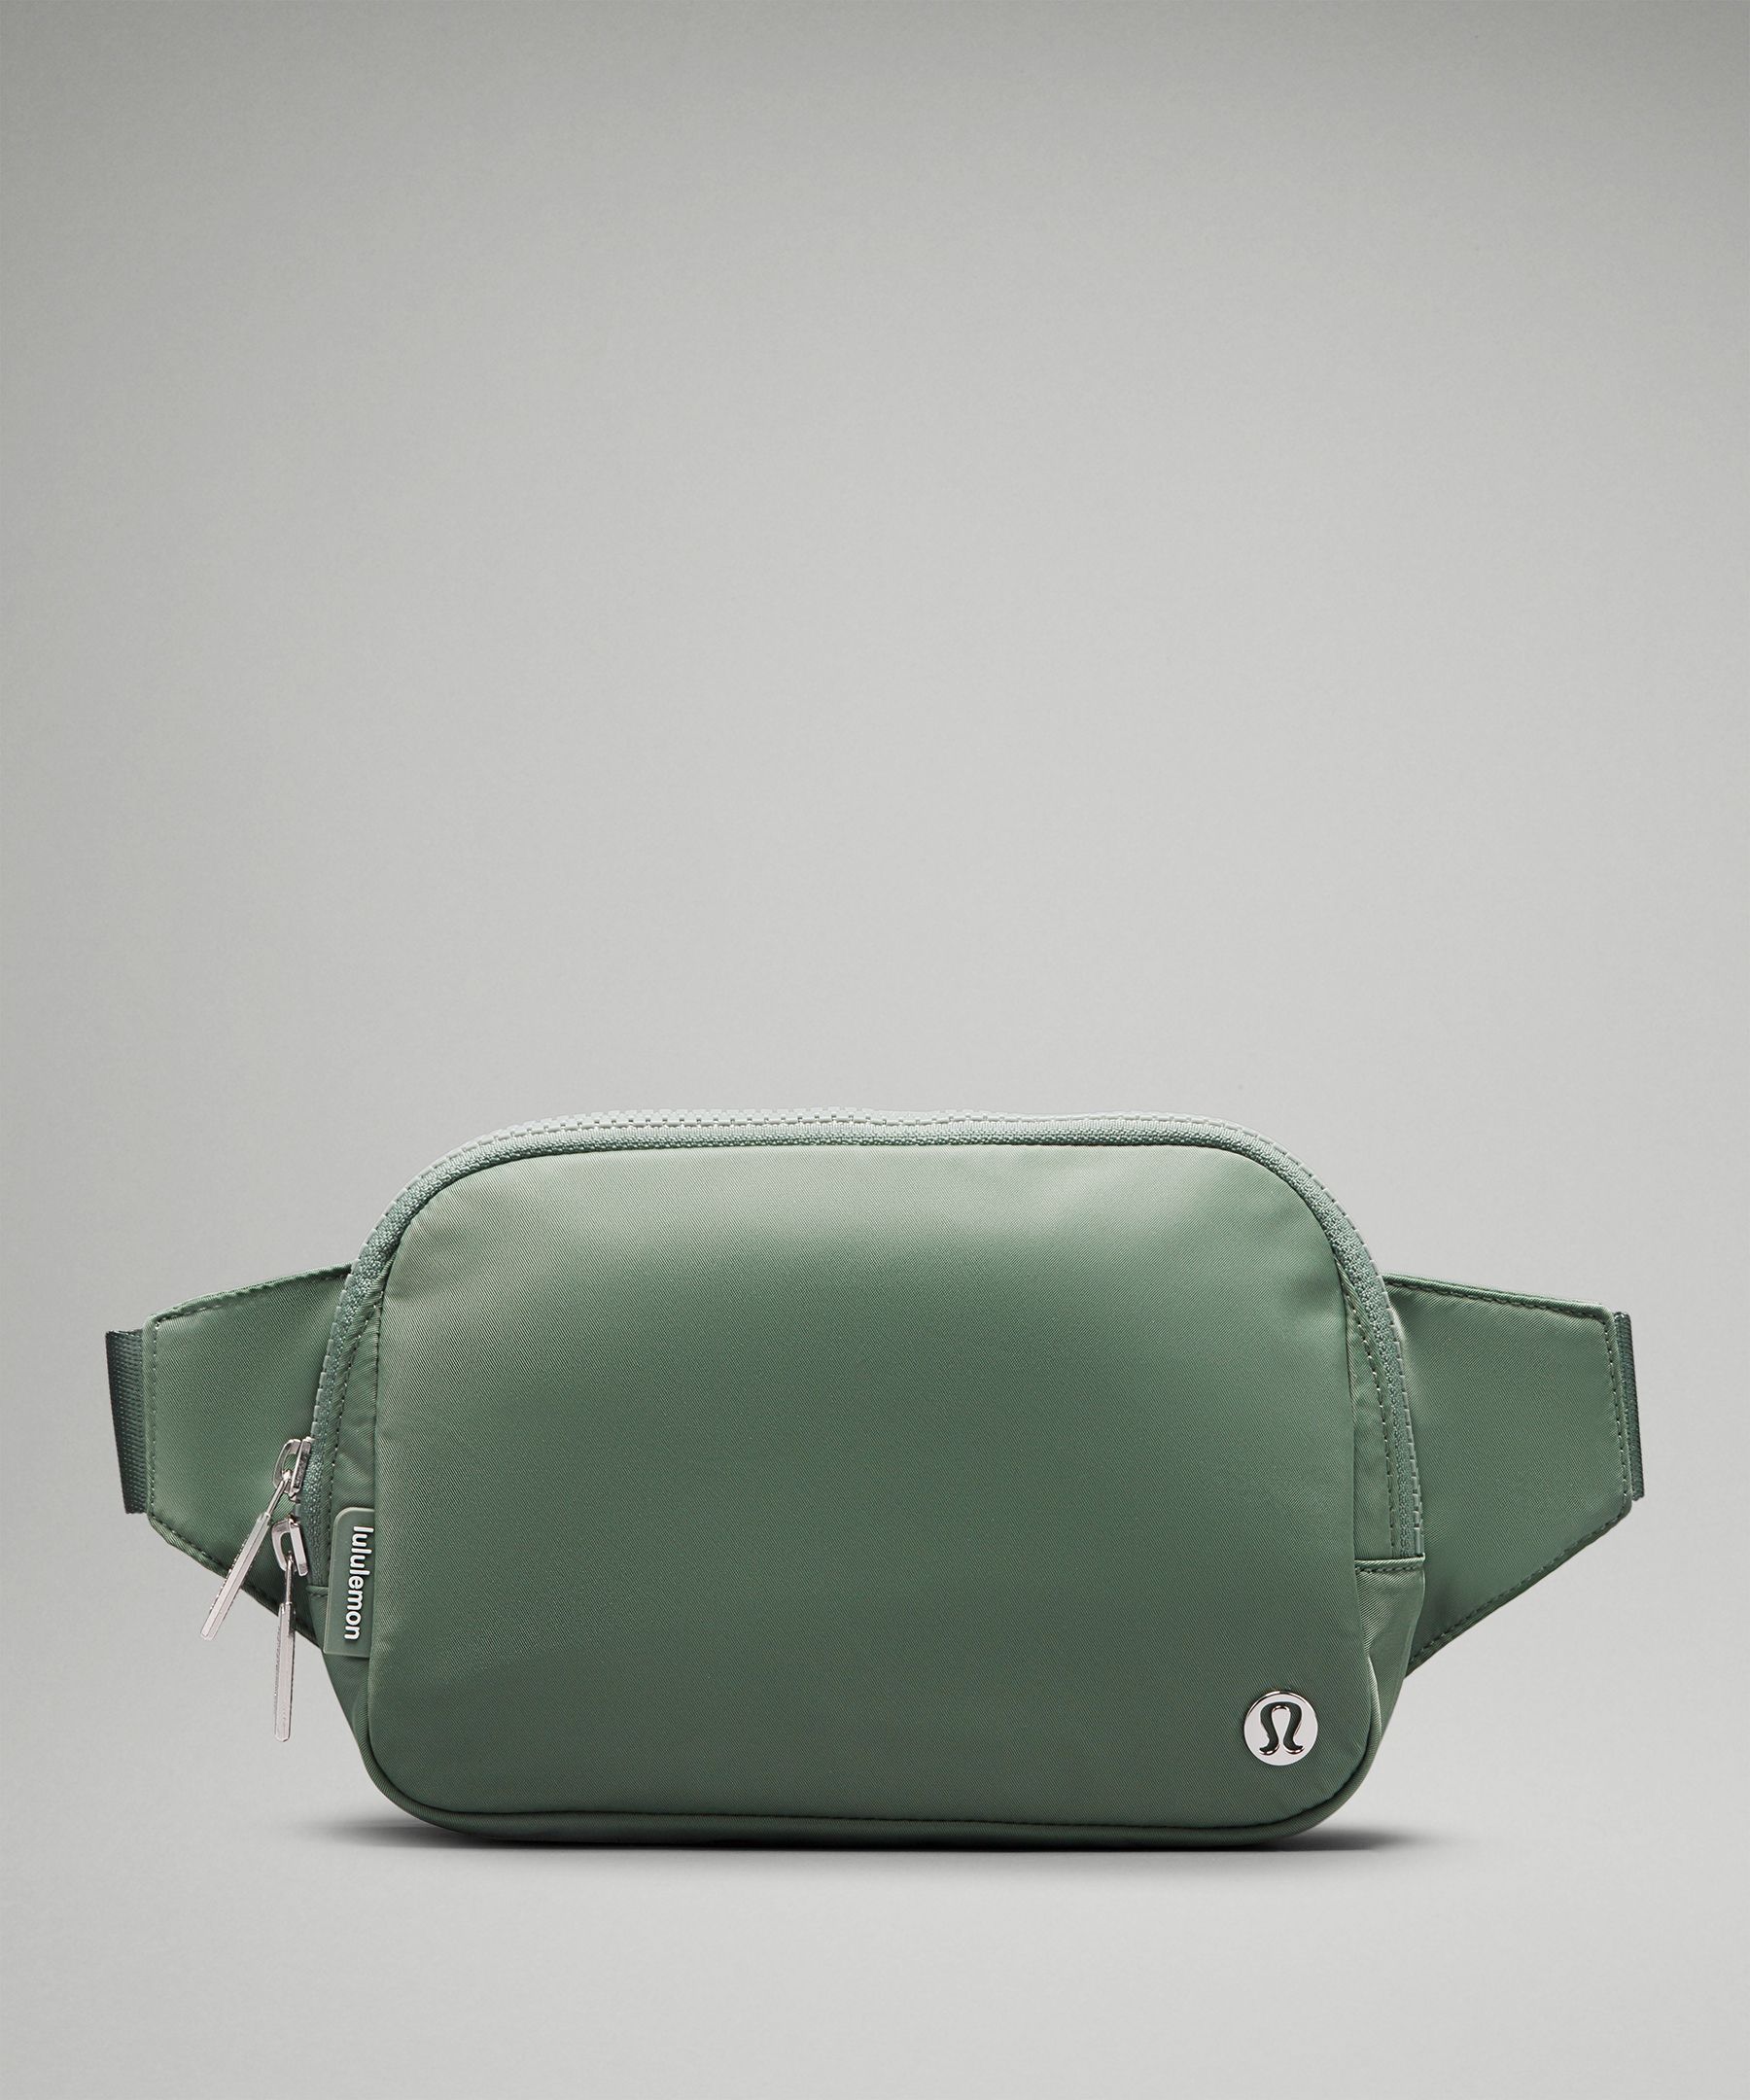 Lululemon look alike bag with green lux nylon : r/sewing